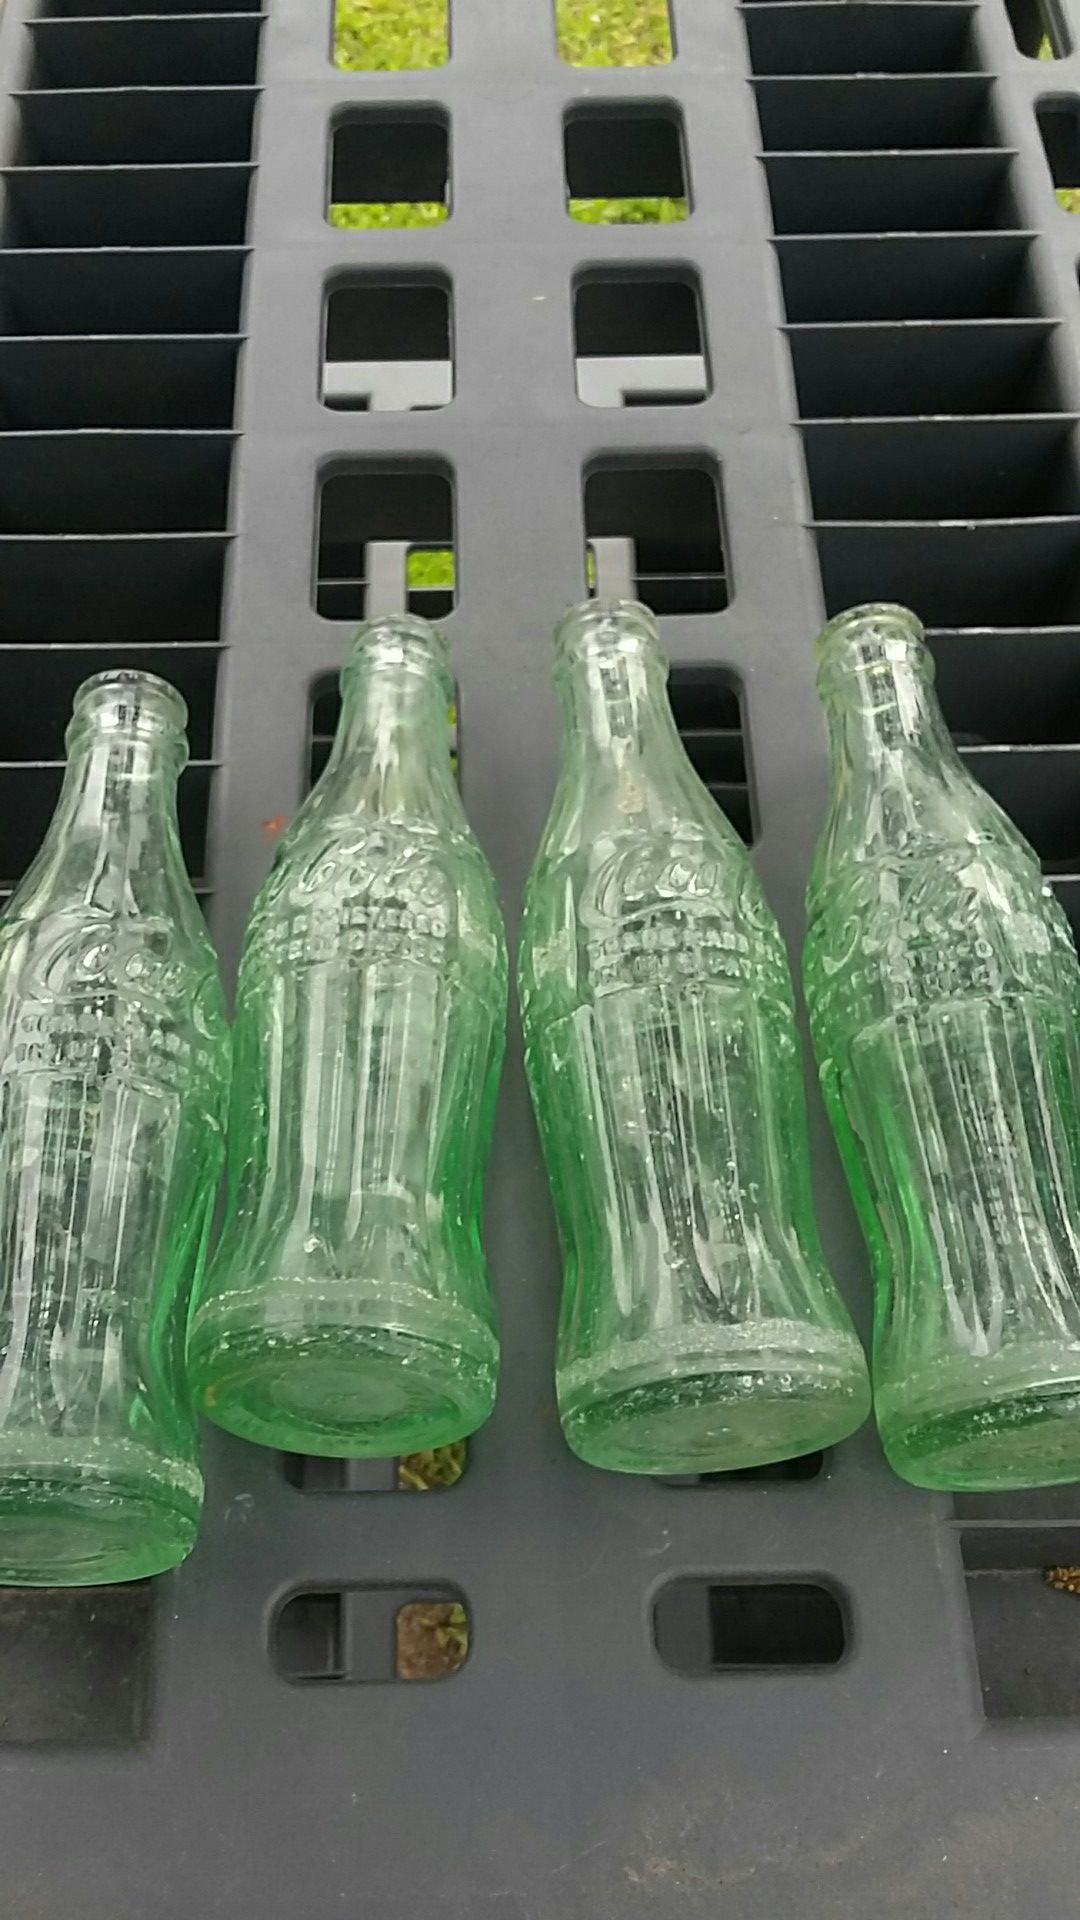 Antique Coke bottles